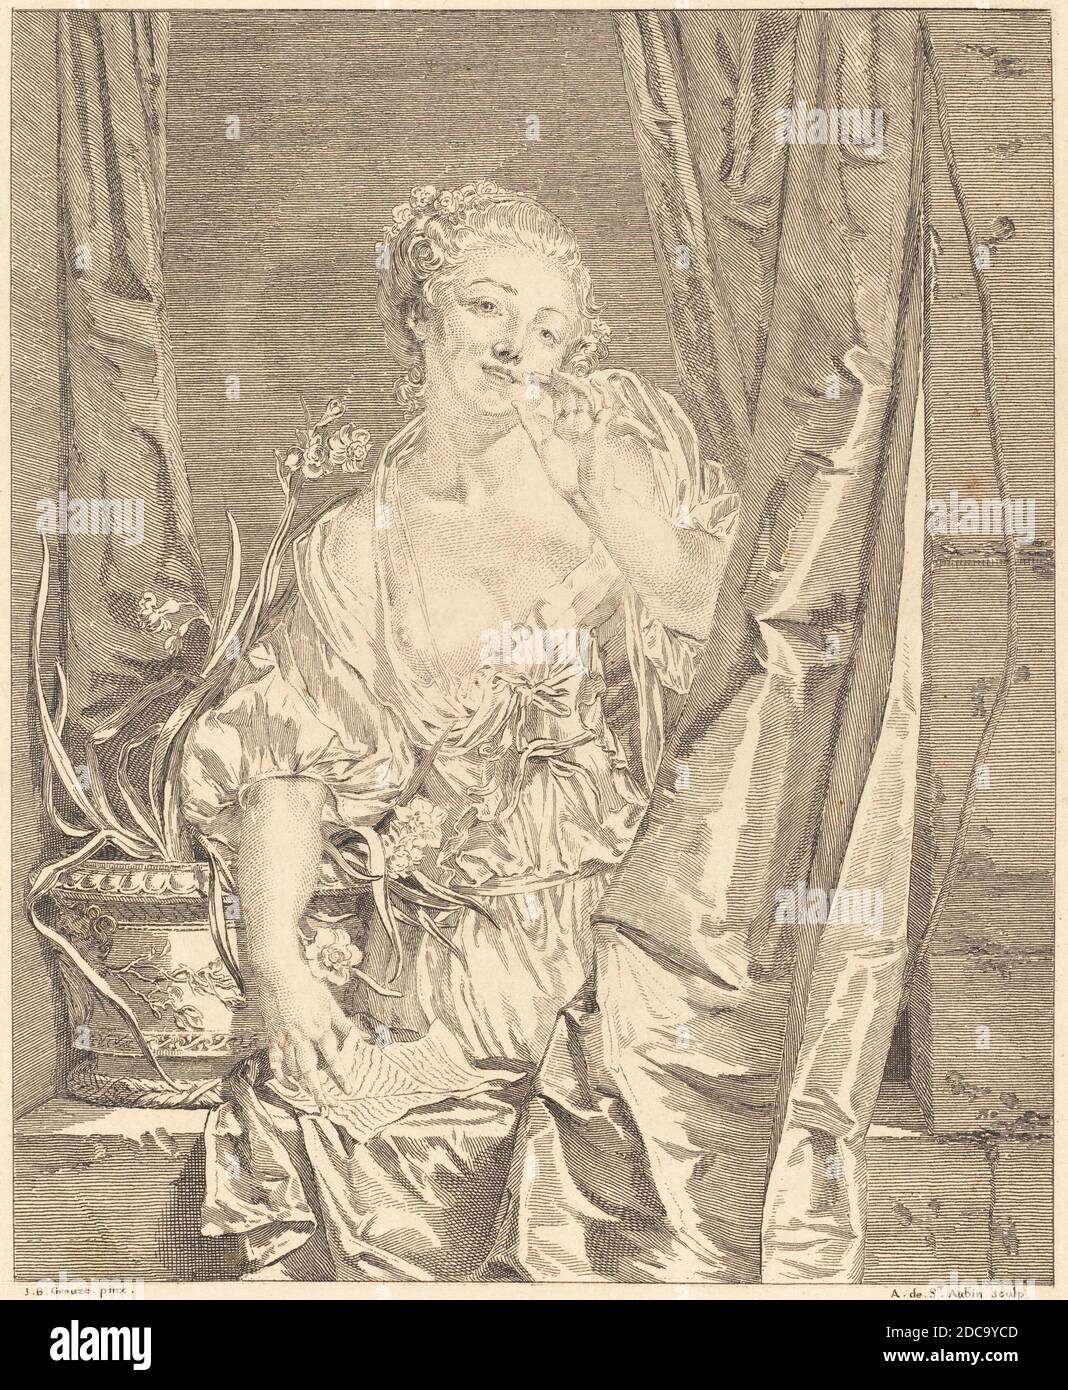 Augustin de Saint-Aubin, (artist), French, 1736 - 1807, Jean-Baptiste Greuze, (artist after), French, 1725 - 1805, Le baiser envoyé, 1771, etching and engraving Stock Photo